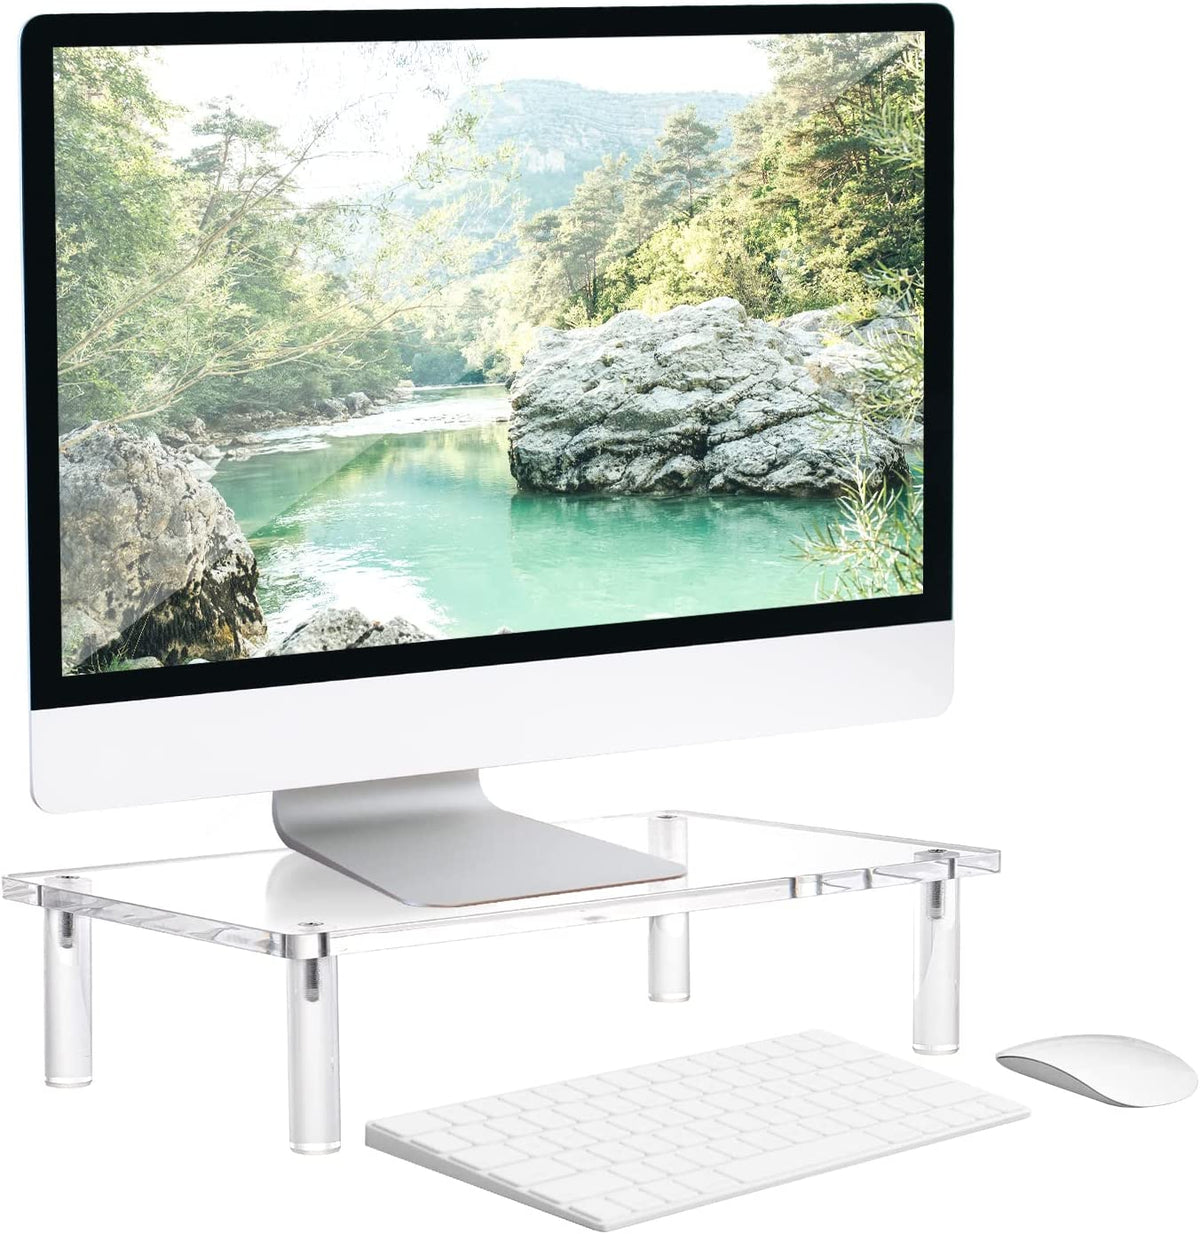 Acrylic Monitor Stand - 10Mm Thickness Clear Platform - 14.5''(L) X 9''(W) X 3.4''(H) Ergonomic Desktop Riser - for Laptop, Pc, Notebook, Printer, Computer, Flat Screen LCD TV